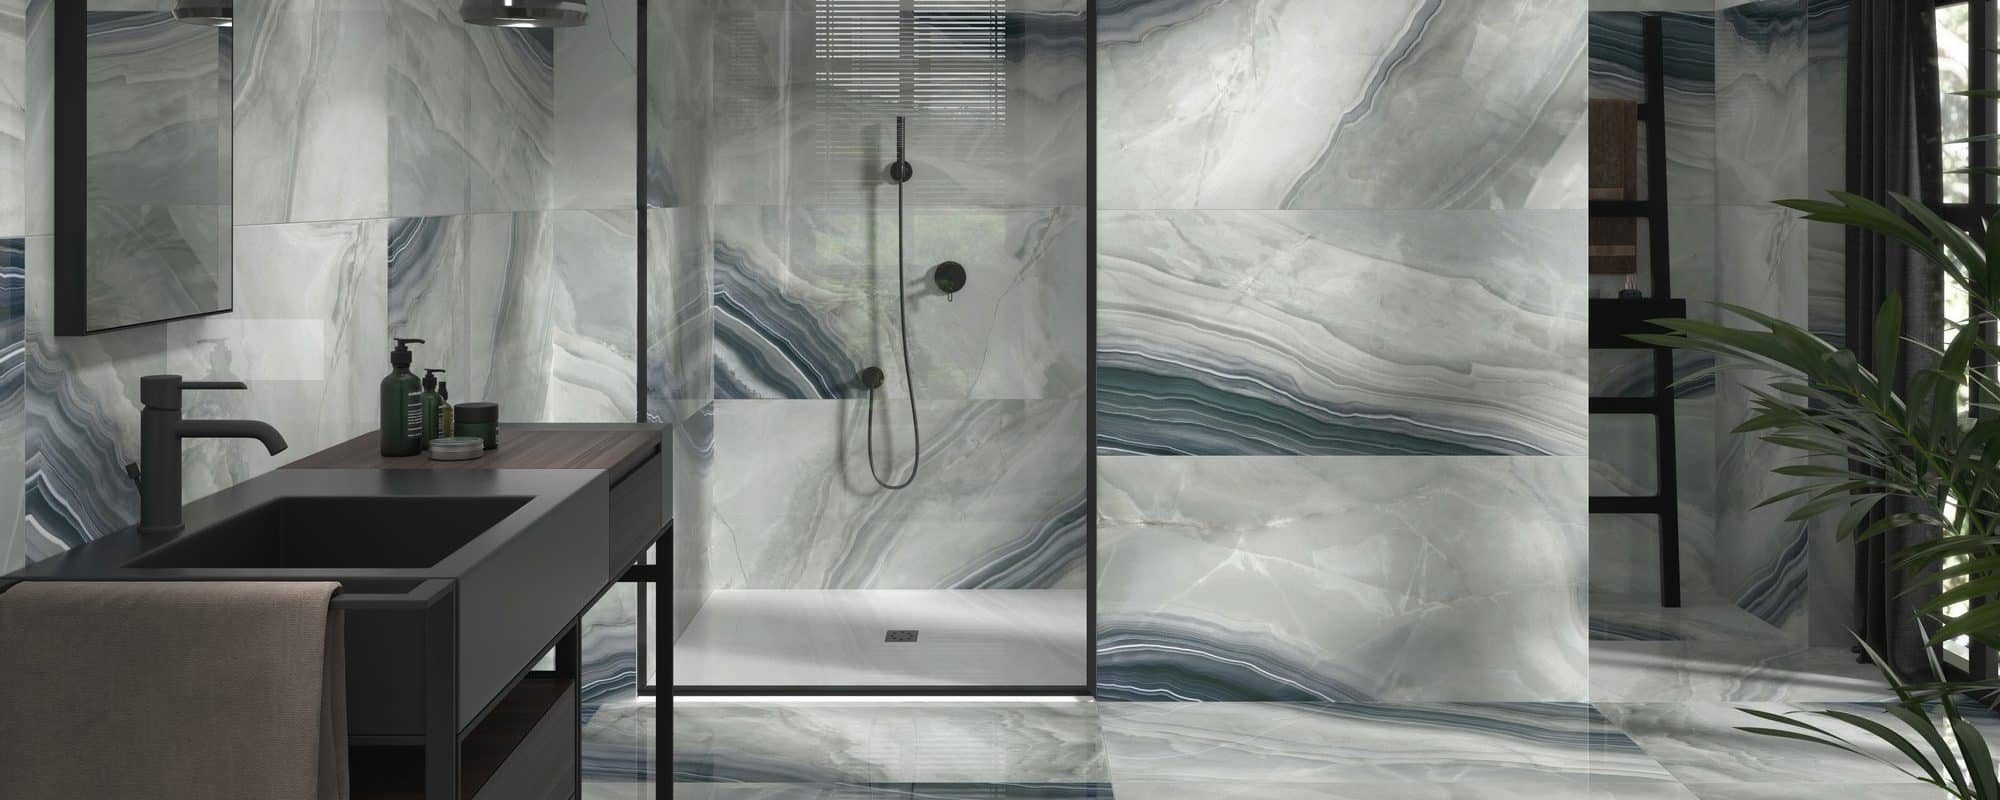 persian-onix-GREEN marble effect bathroom tiles uk slider 1